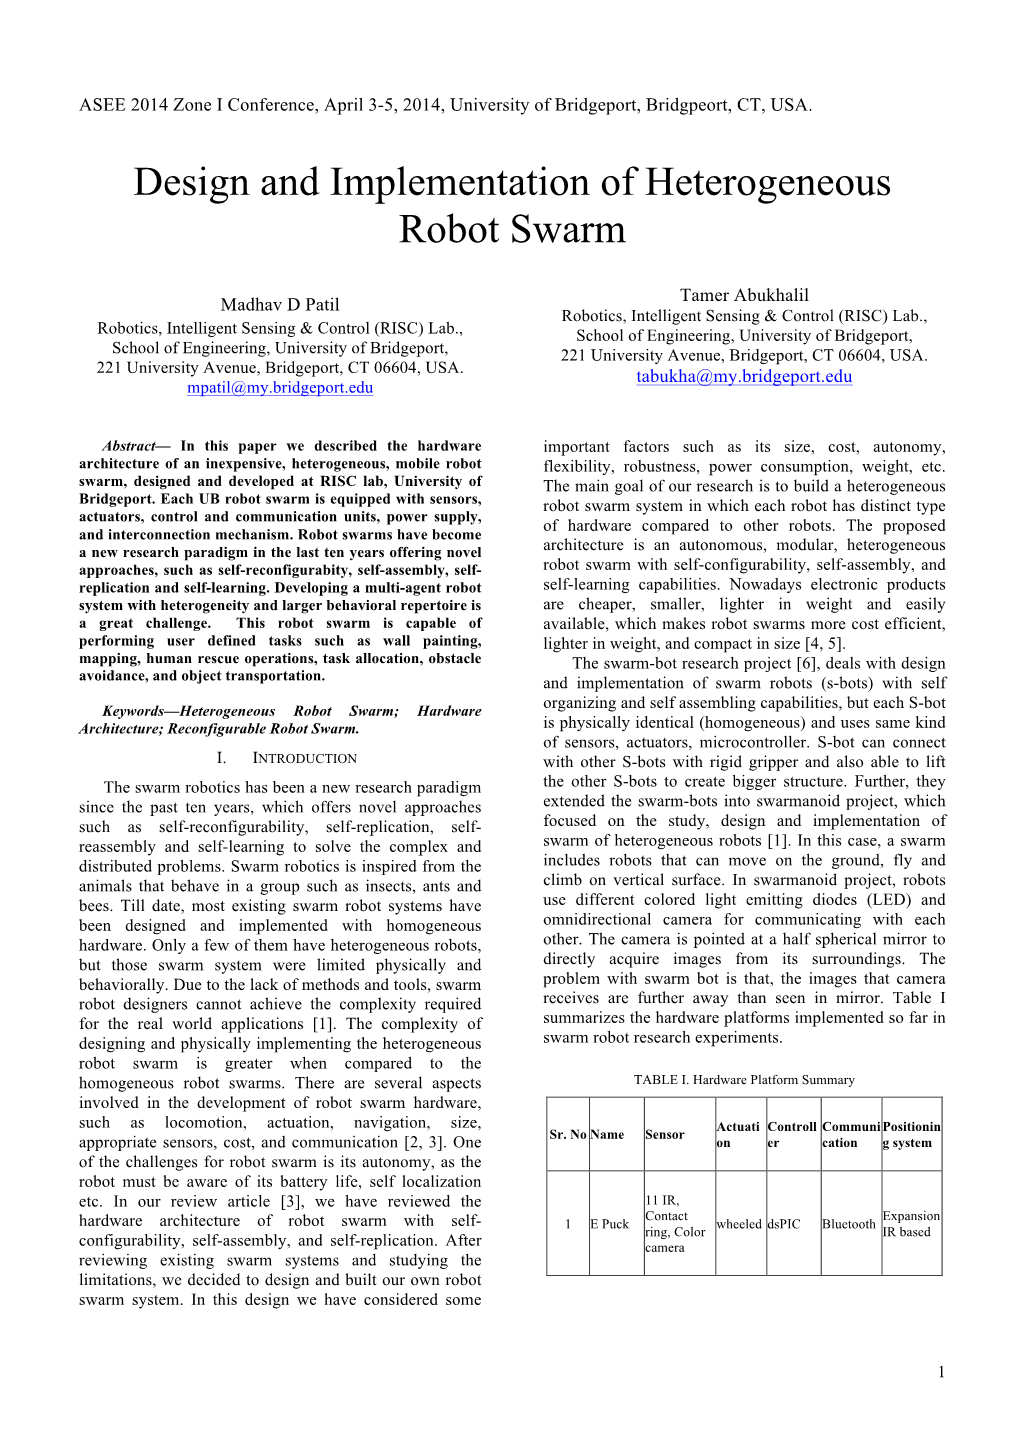 Design and Implementation of Heterogeneous Robot Swarm